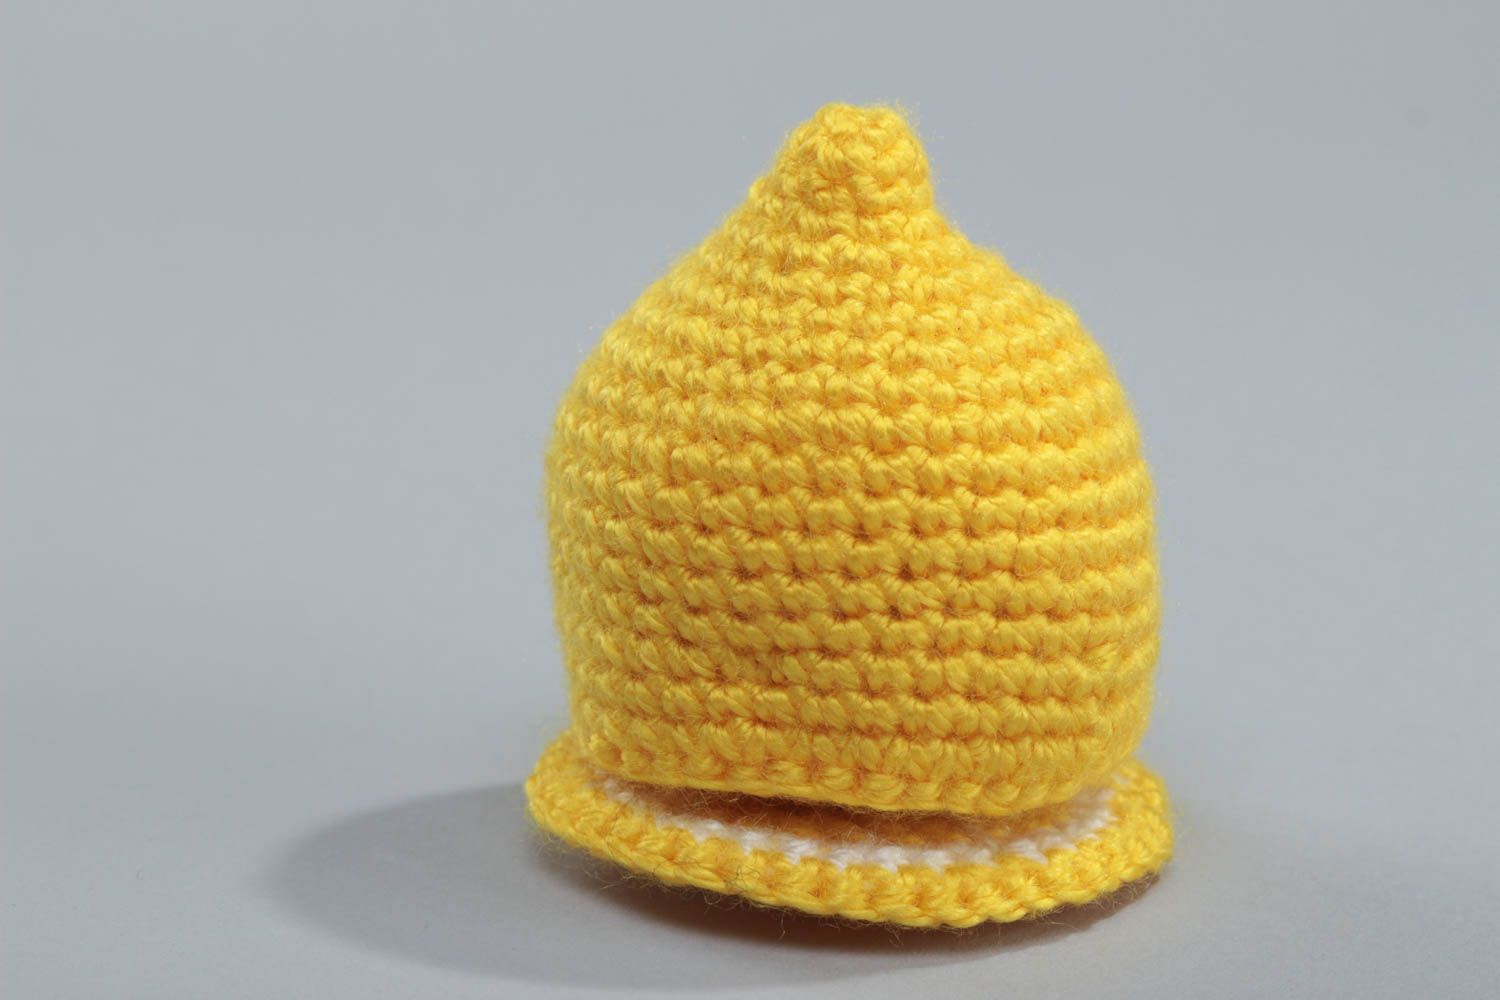 Handmade soft toy lemon crocheted of acrylic threads for kids and interior decor photo 4